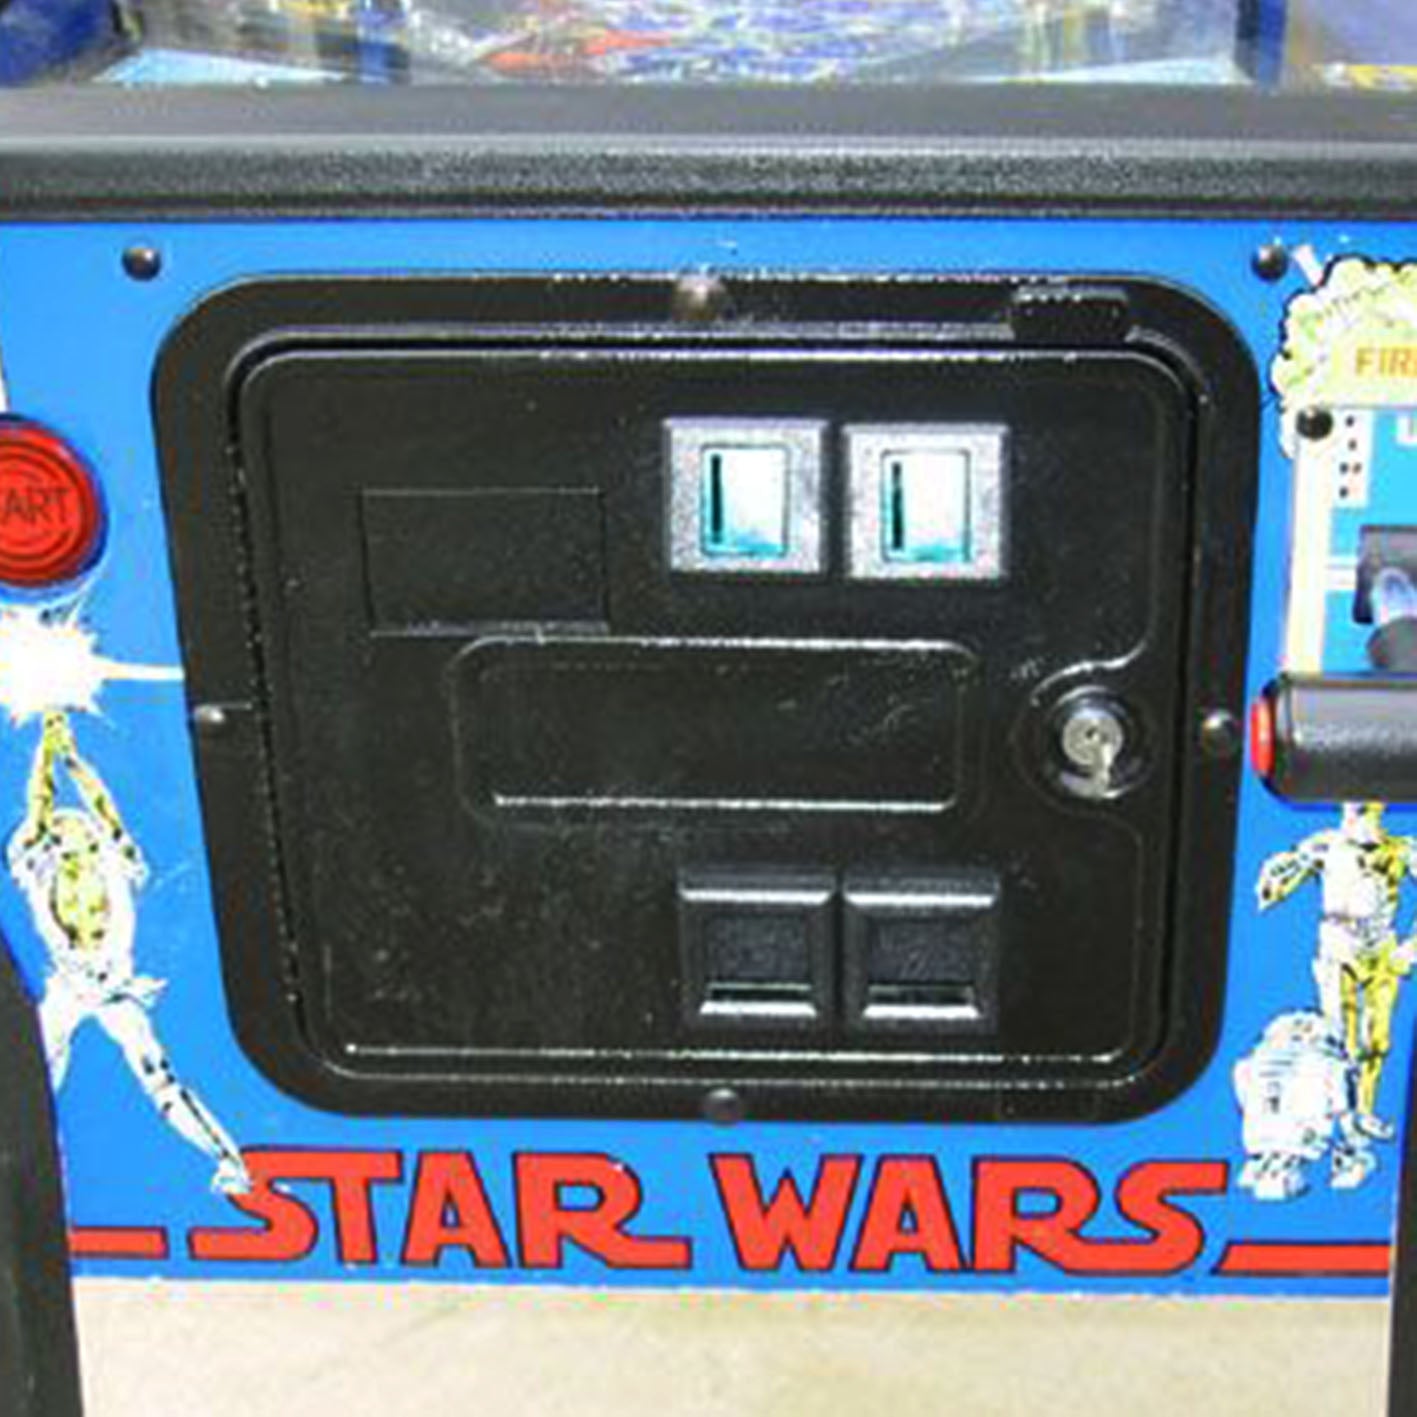 Star Wars Pinball Machine by Data East, Coming Soon!